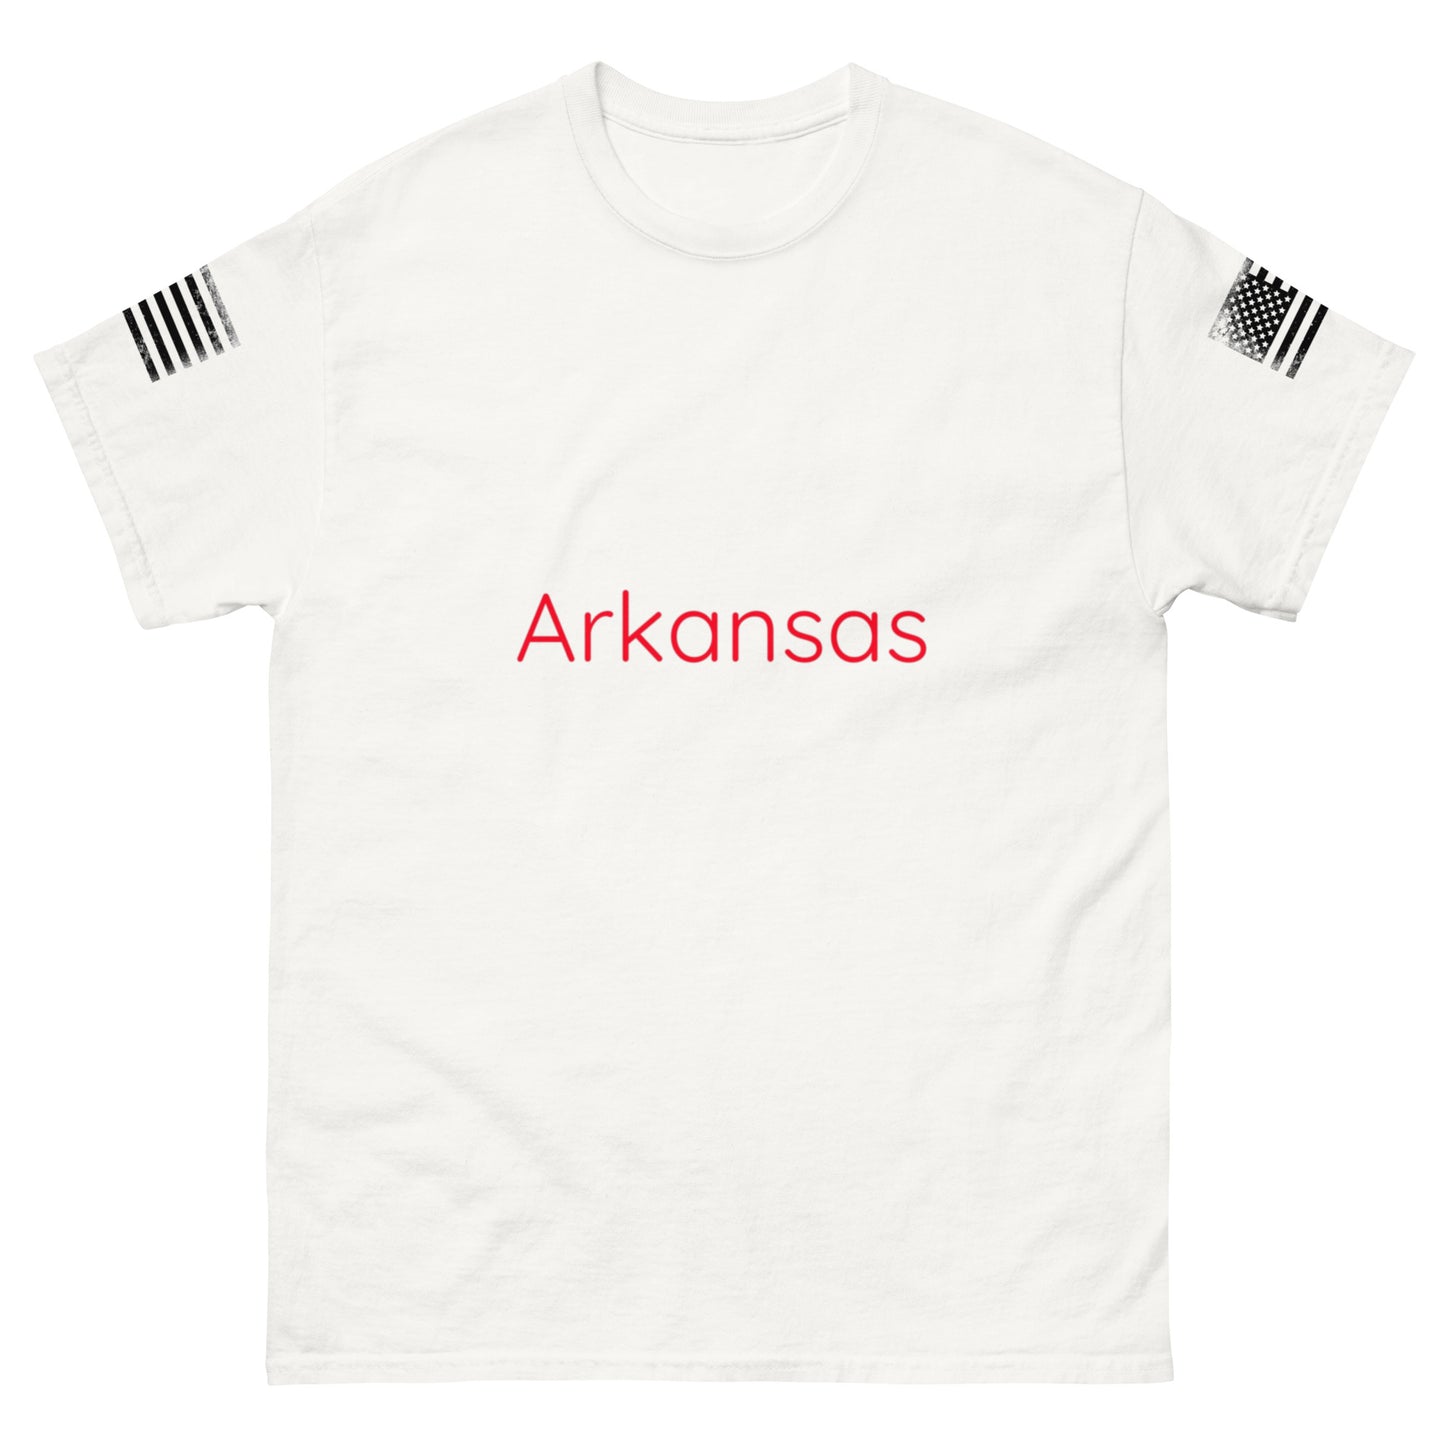 Arkansas Men's Tee I